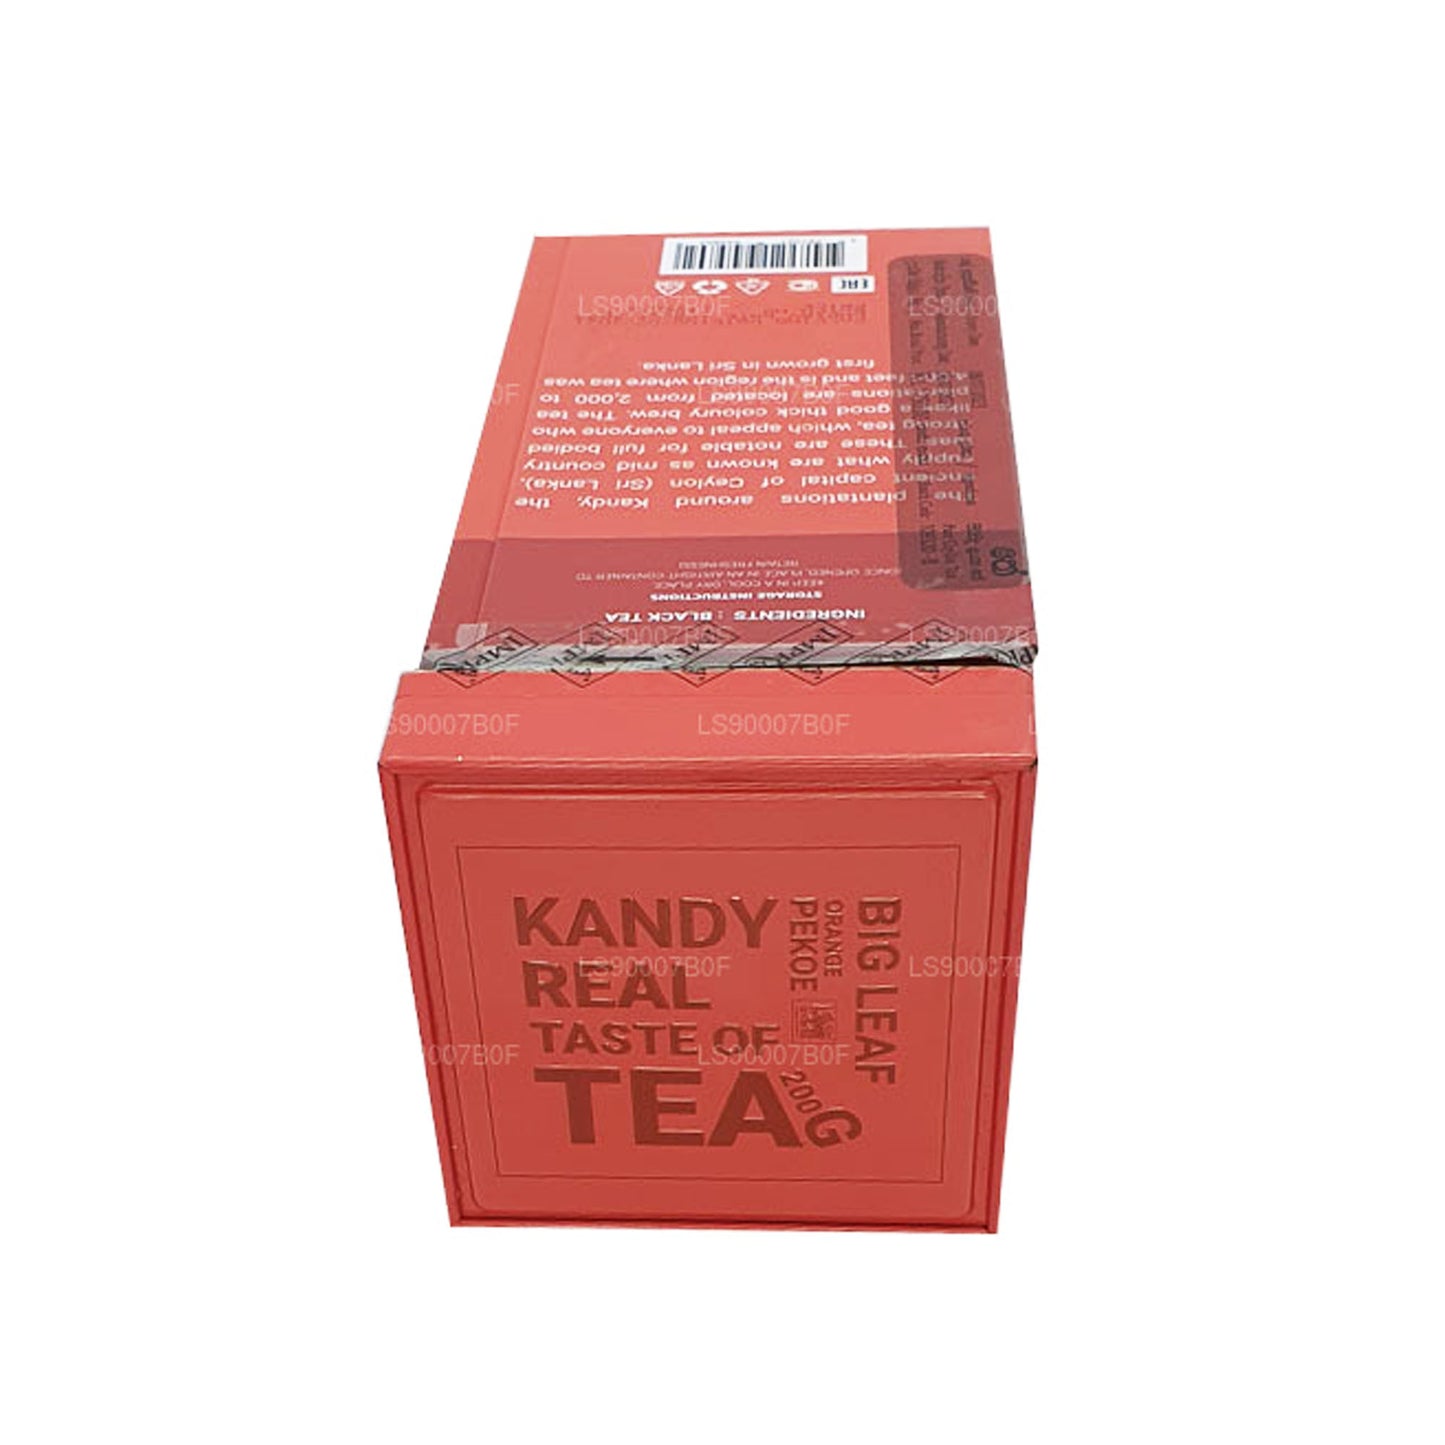 Impra Kandy Taste of Tea Big Leaf Orange Pekoe (200 g) - Contenitore per carne